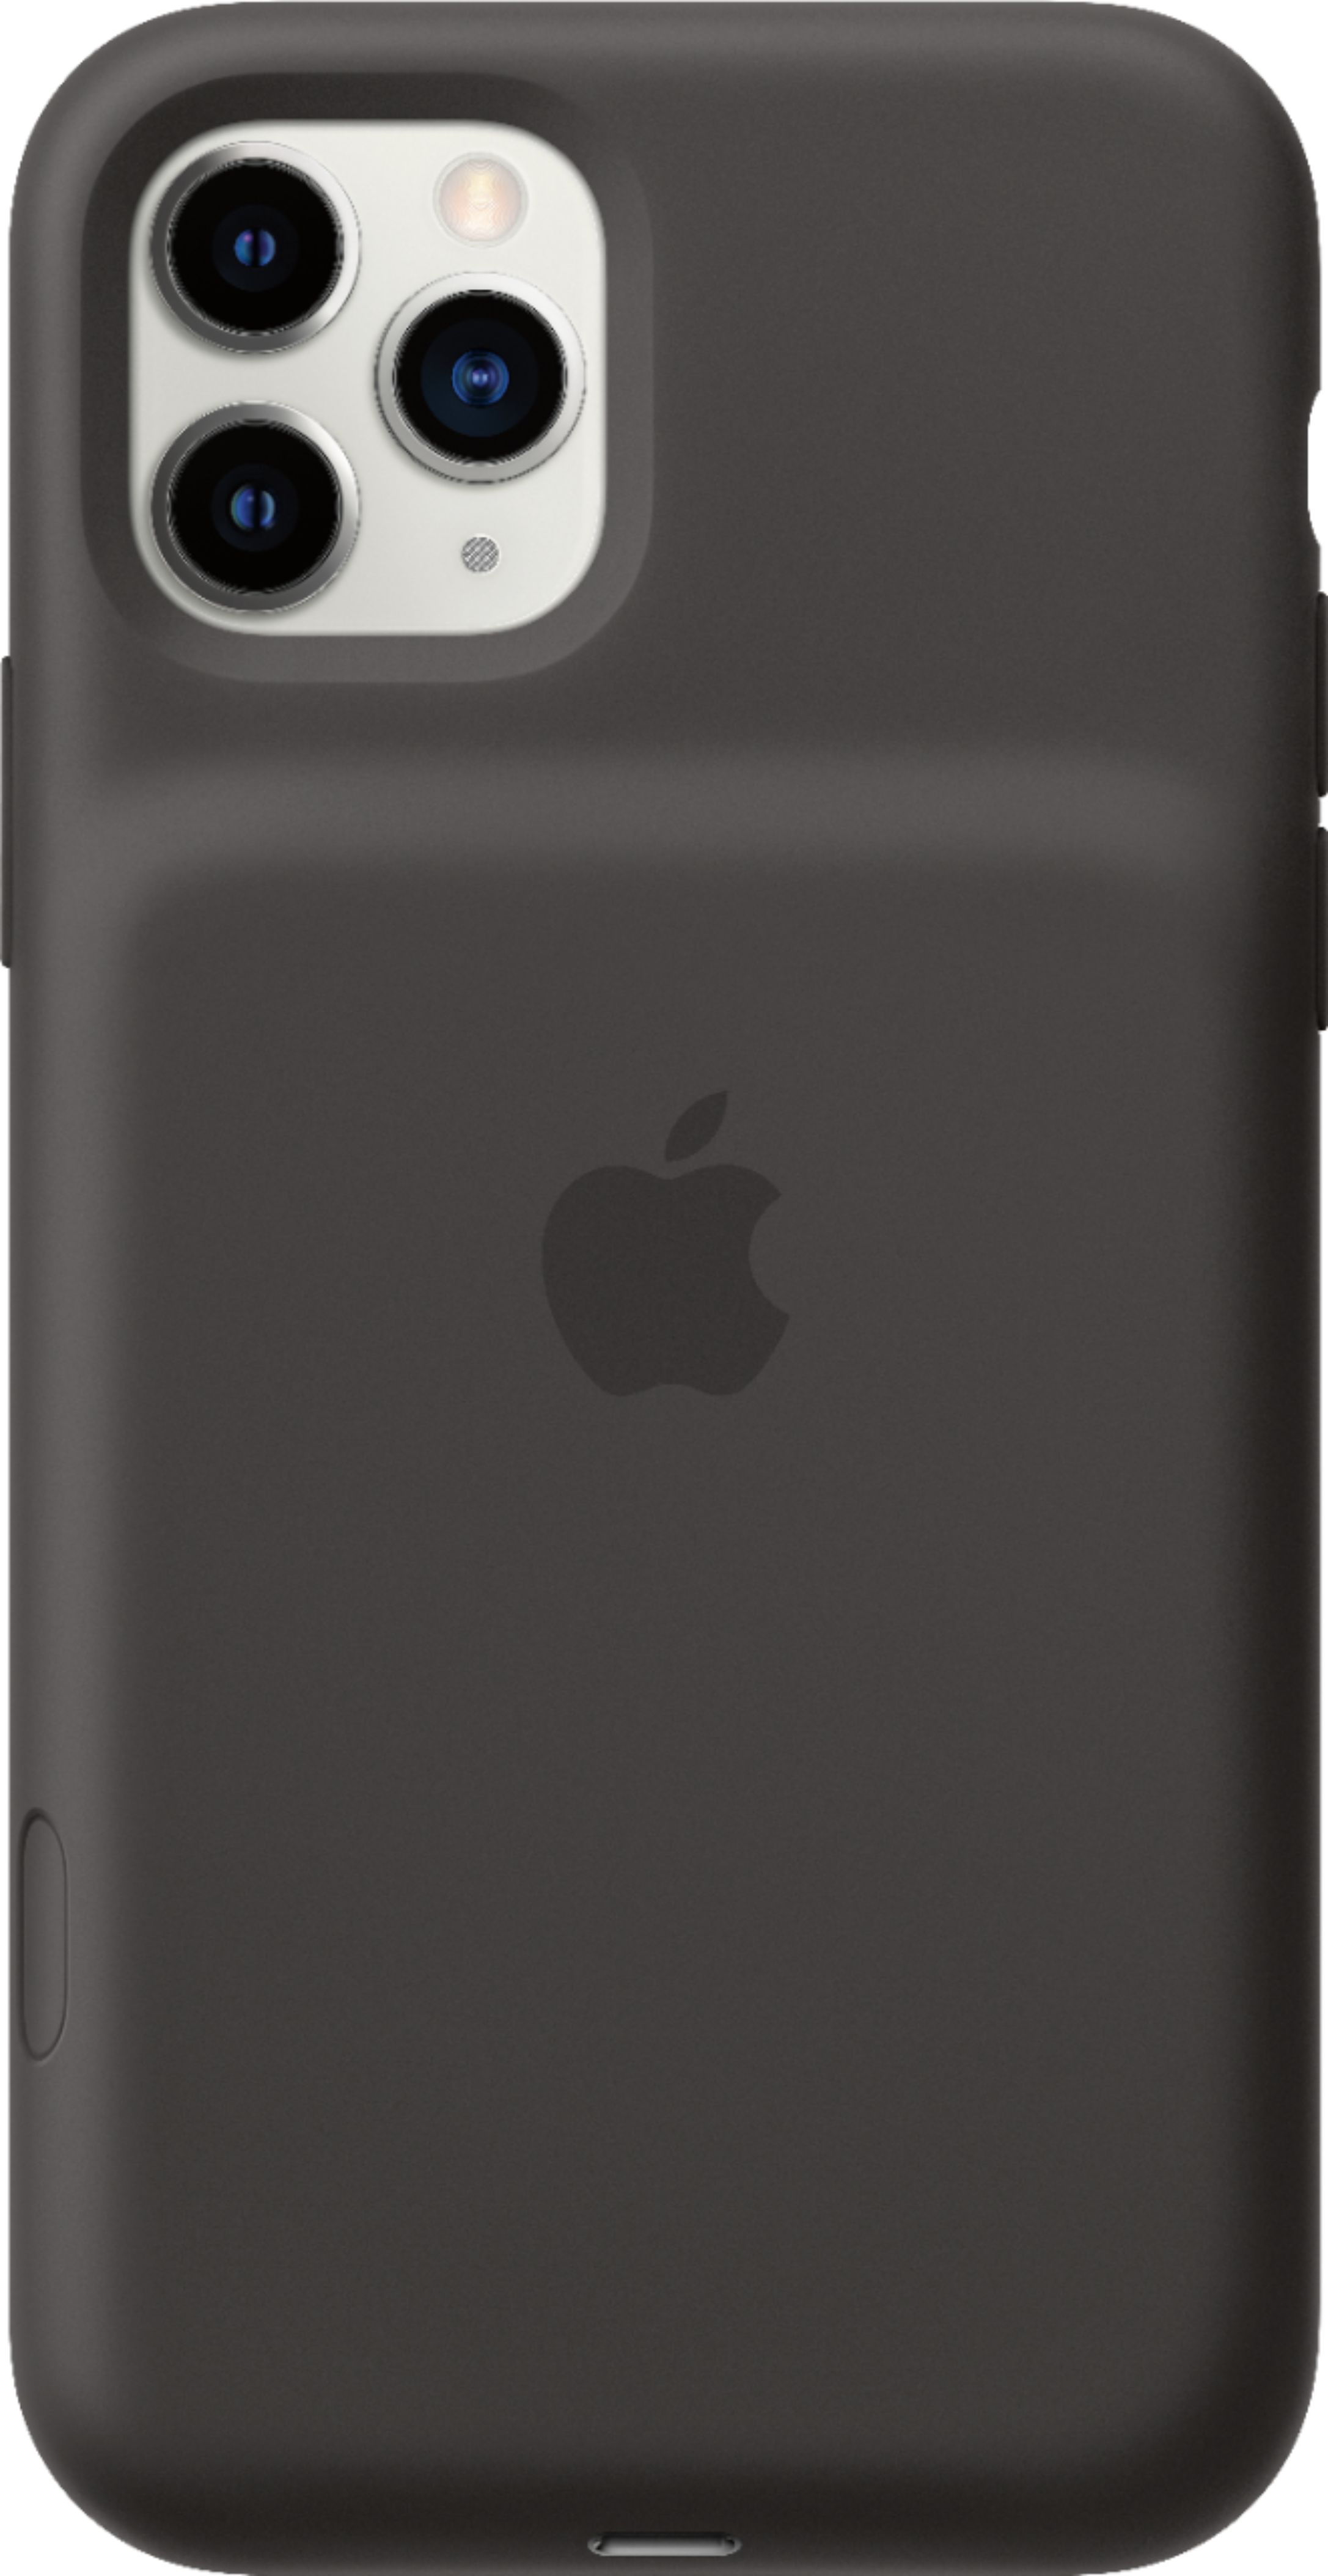 Best Buy: Apple iPhone 11 Pro Smart Battery Case Black MWVL2LL/A